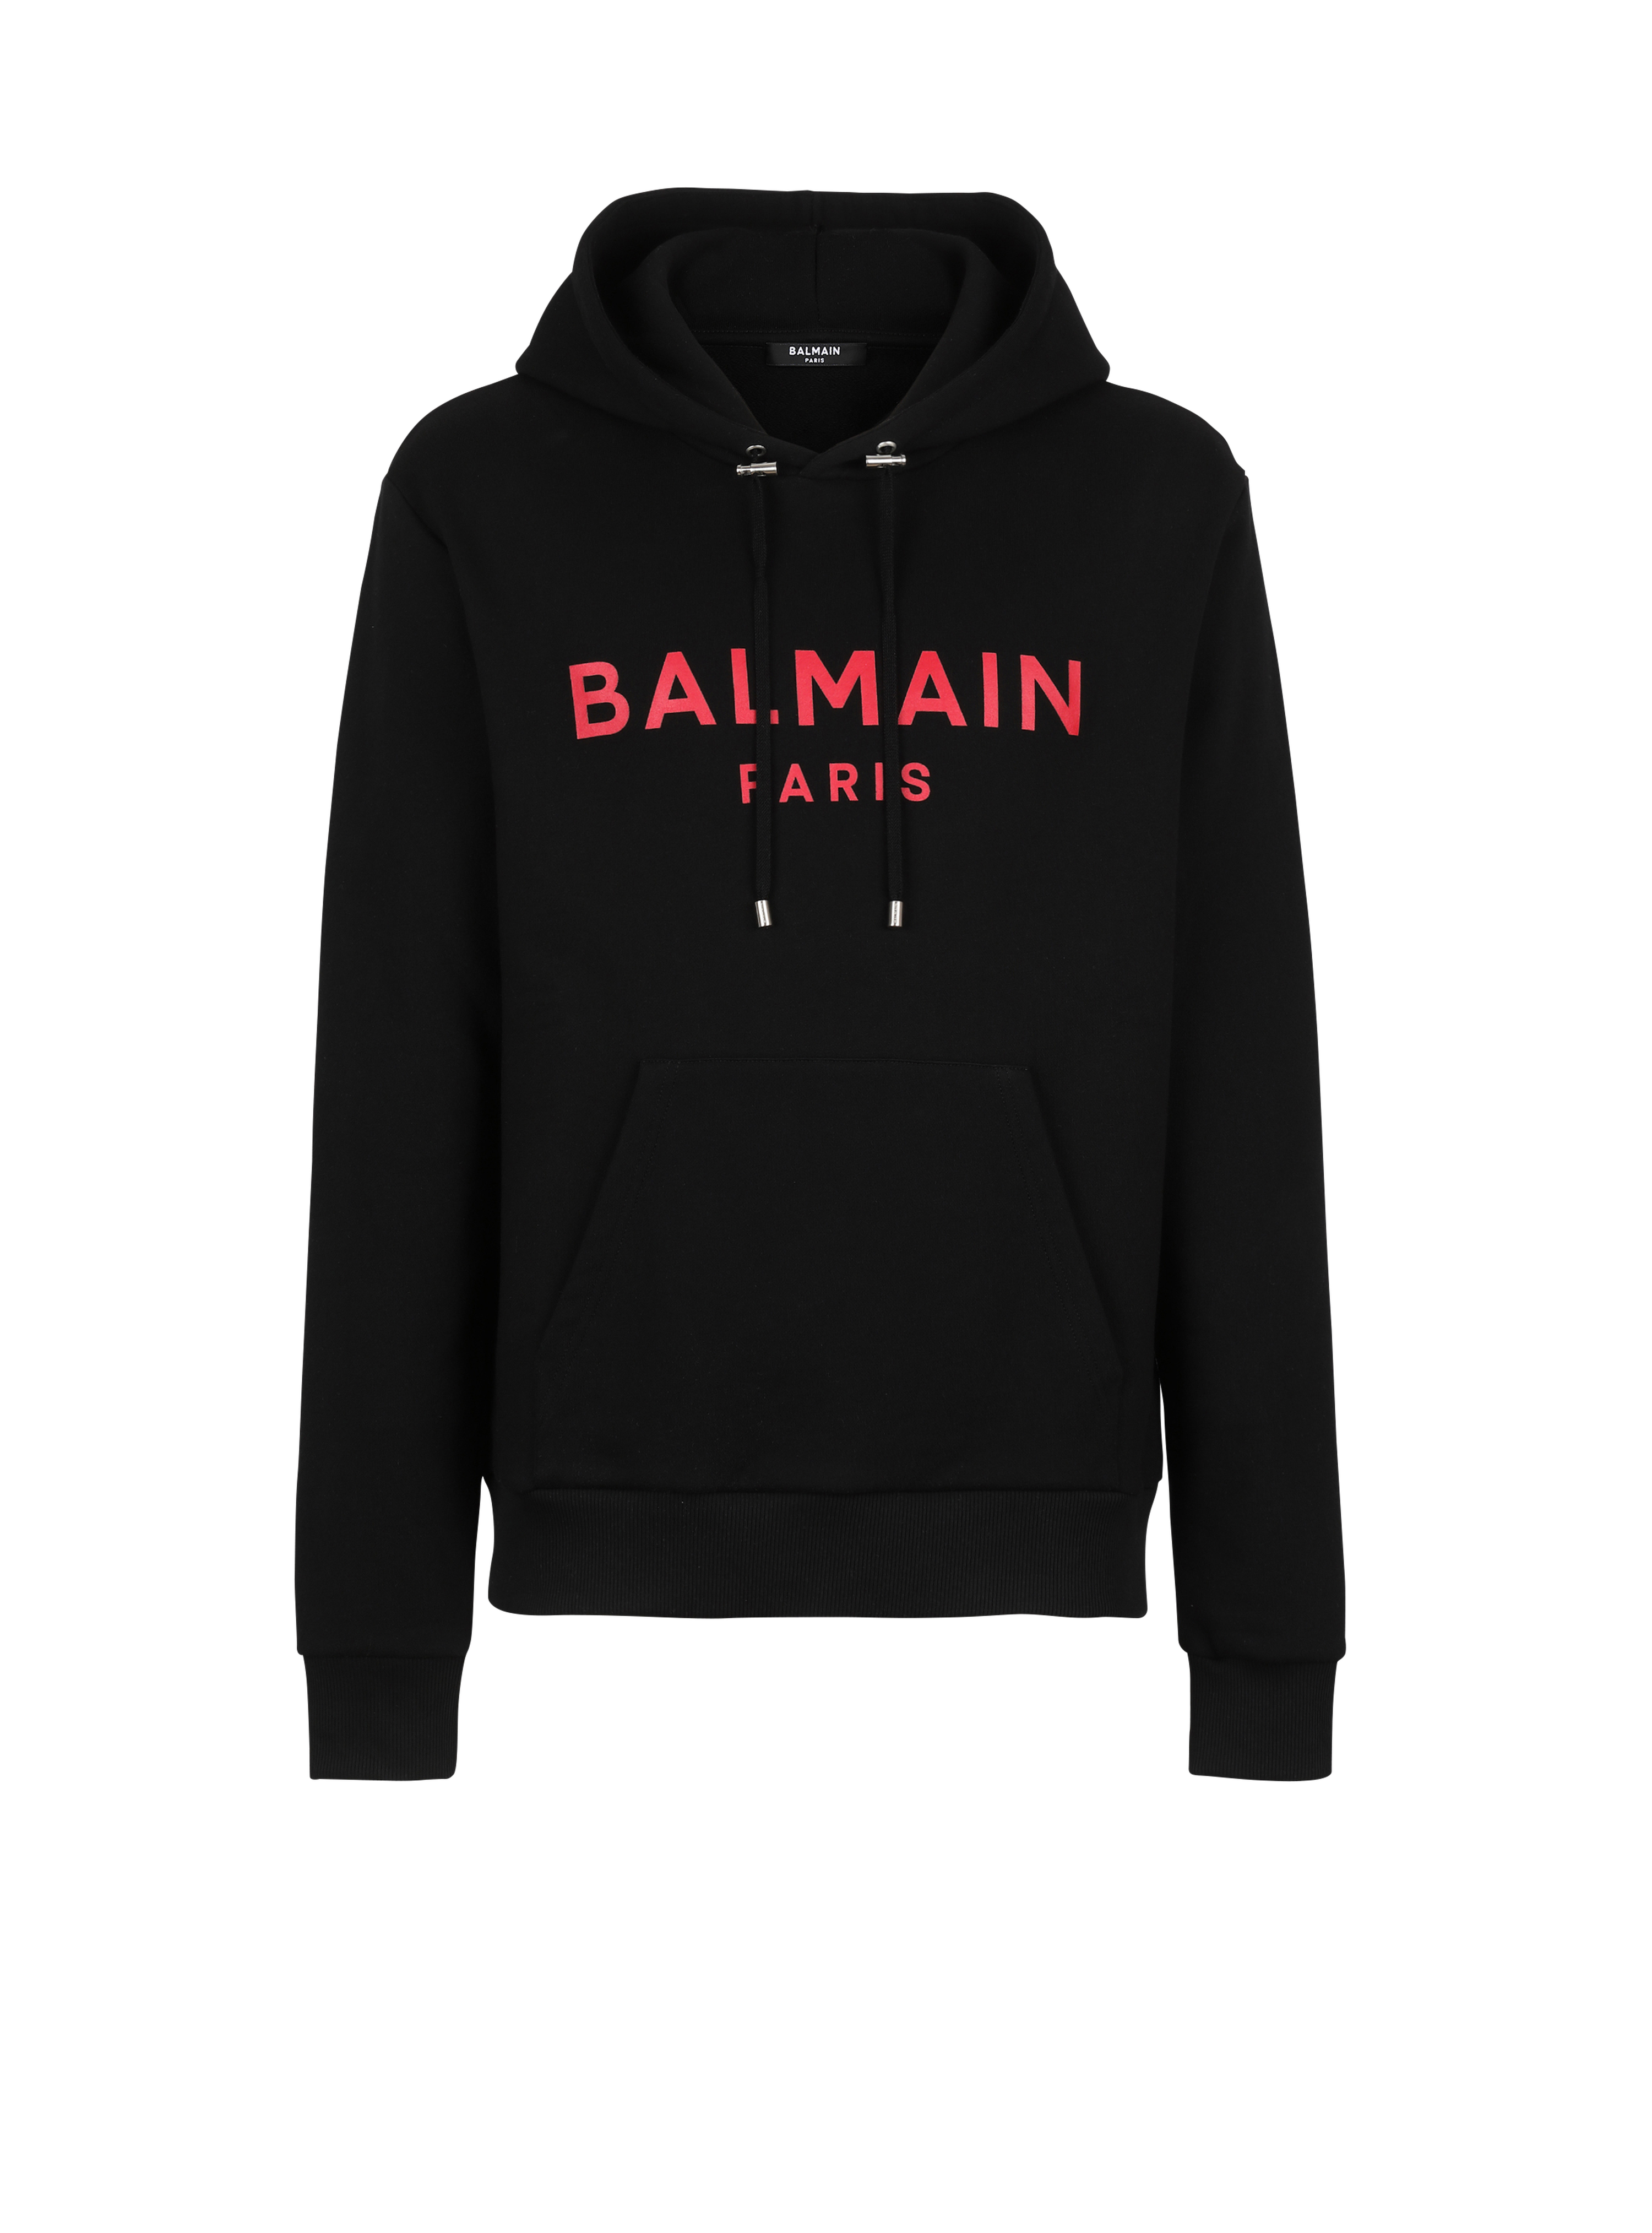 EXCLUSIVE - Cotton sweatshirt with Balmain Paris logo print, black